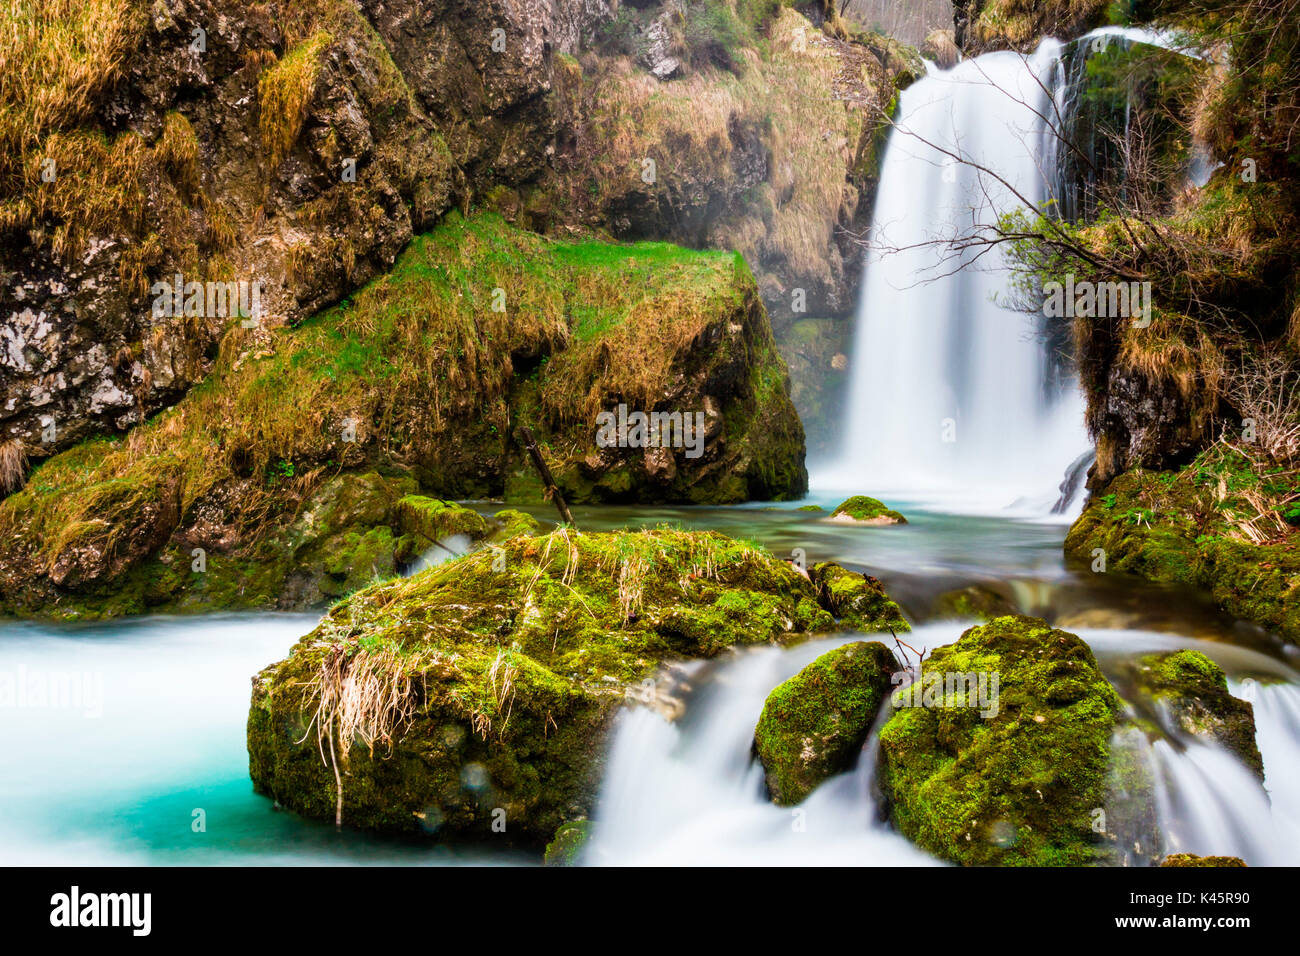 Waterfall, Municipality of Lastebasse, Province of Vicenza, Veneto, Italy. Cascading water over rocks. Stock Photo